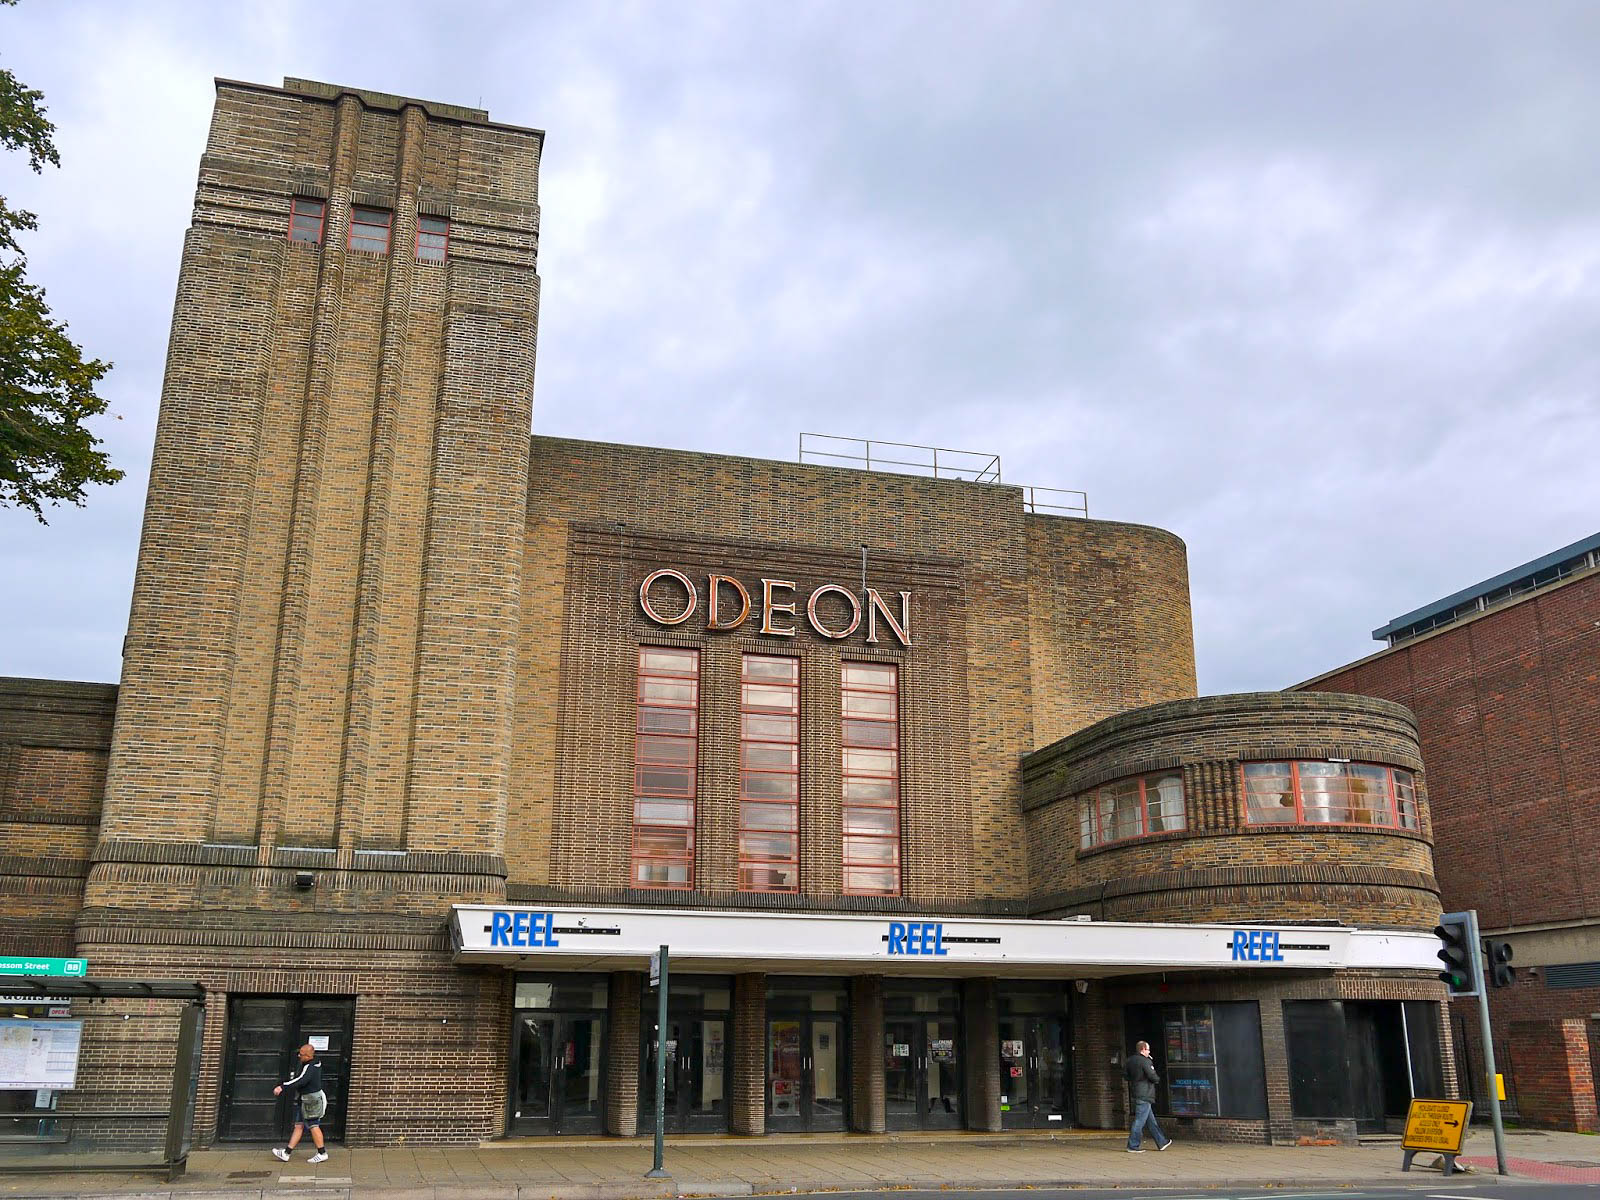 Le cinéma Odeon de York en Angleterre